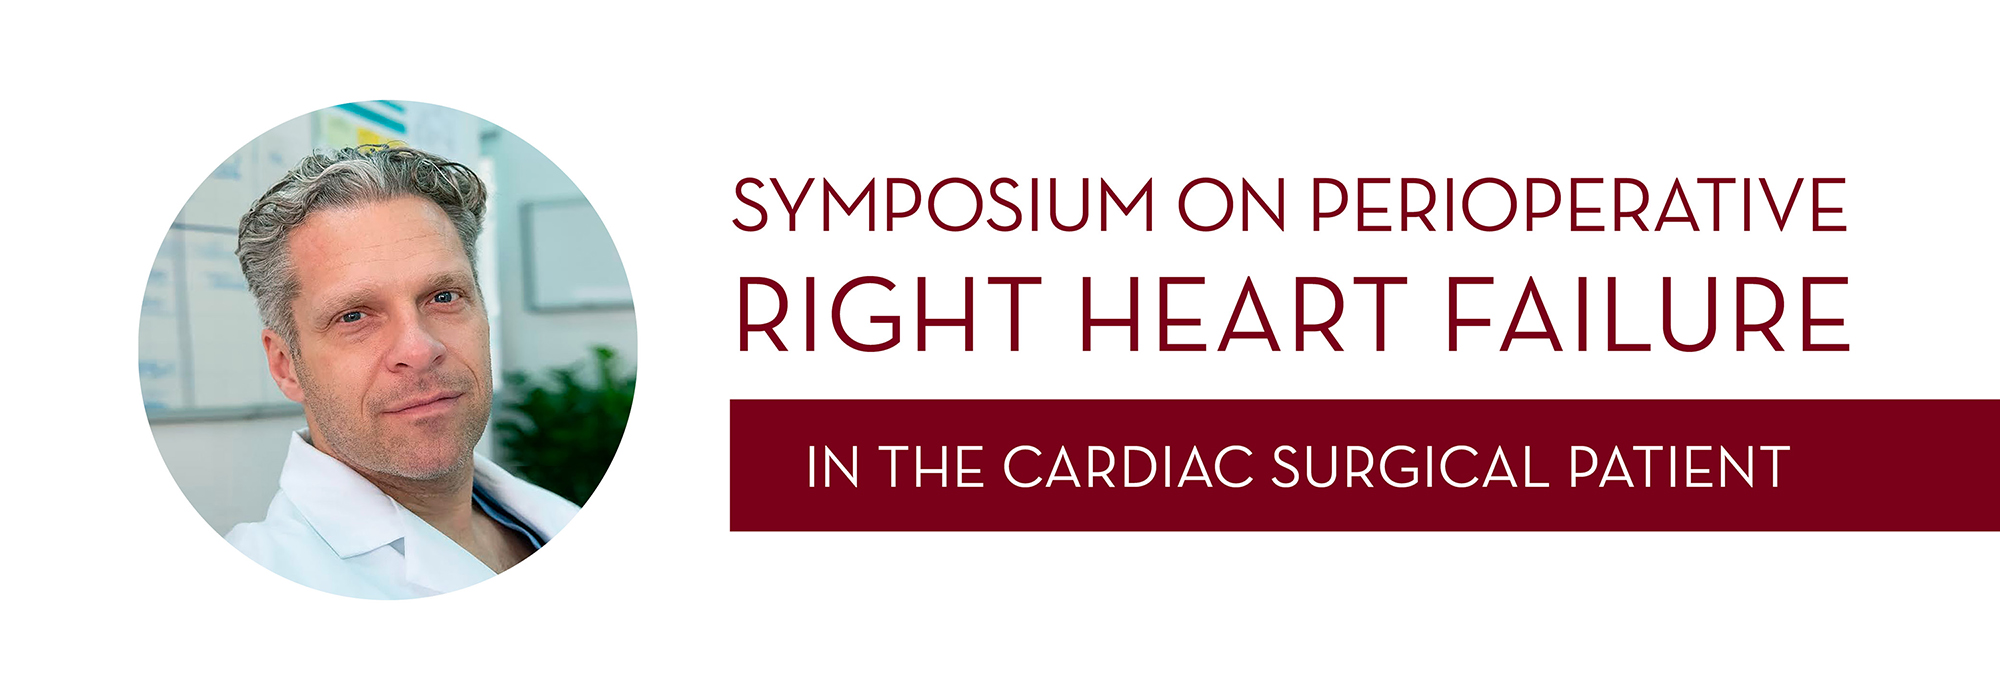 cardiac symposium